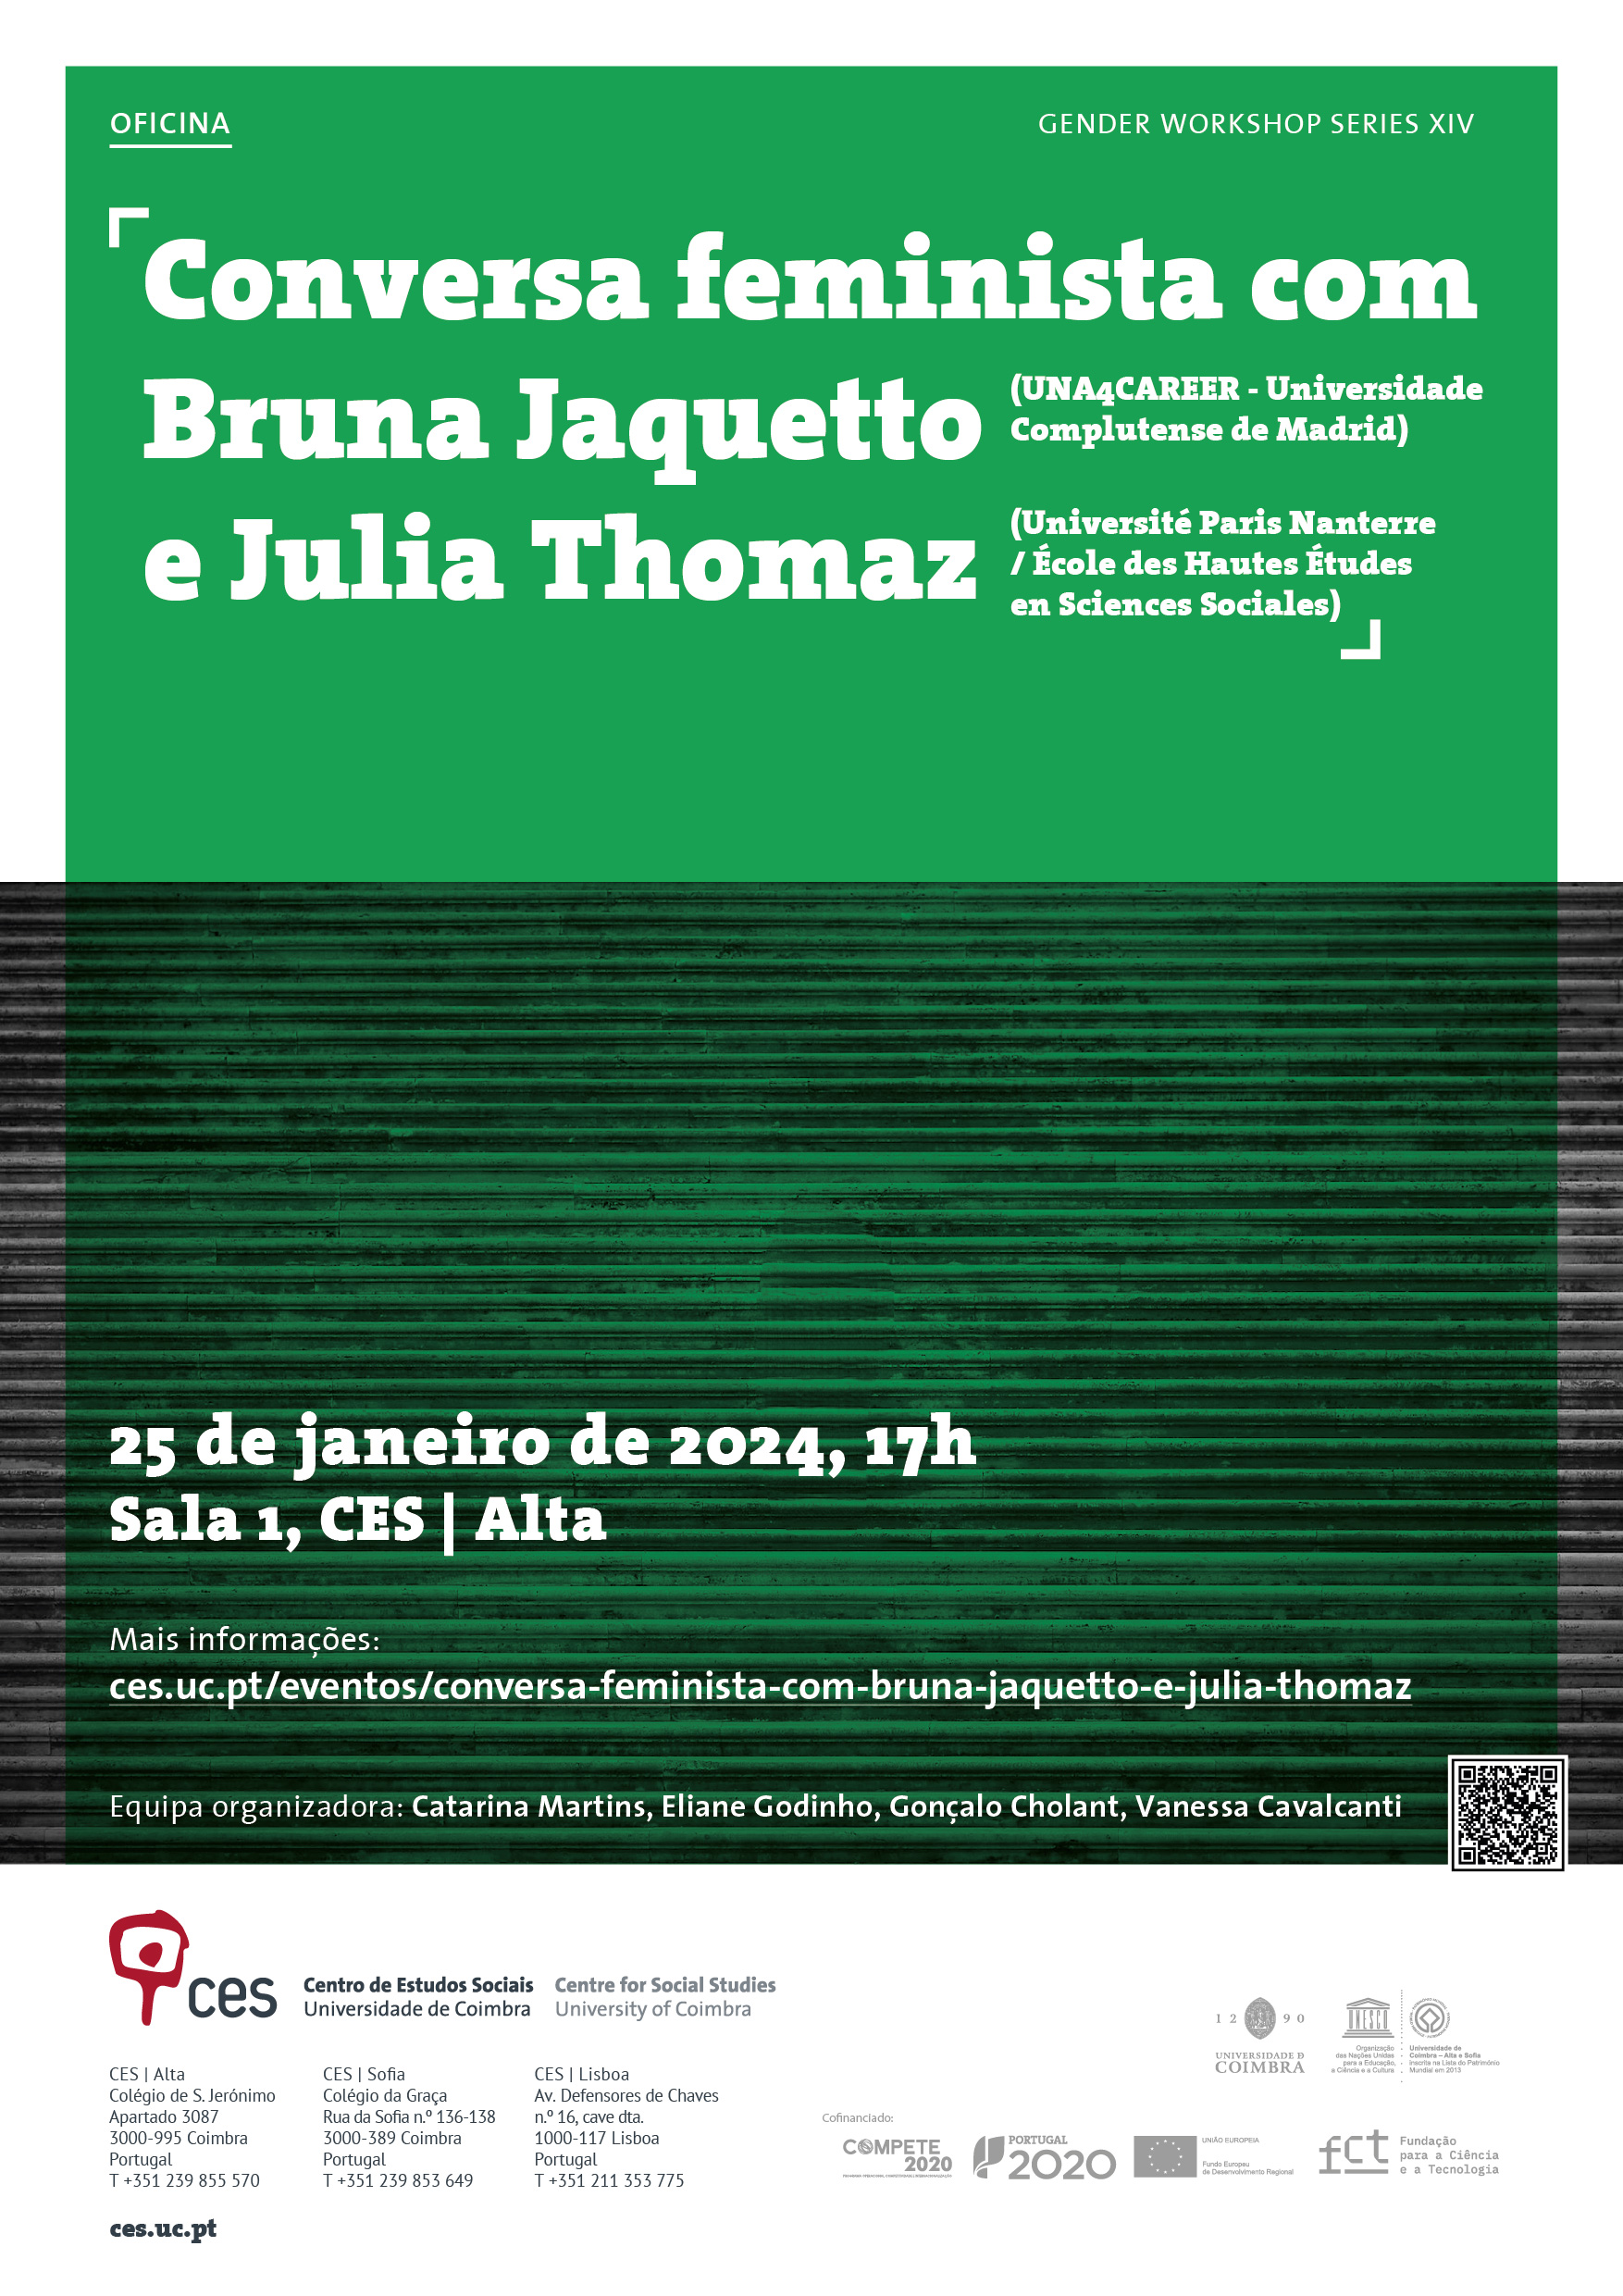 Feminist Talk with Bruna Jaquetto and Julia Thomaz<span id="edit_44350"><script>$(function() { $('#edit_44350').load( "/myces/user/editobj.php?tipo=evento&id=44350" ); });</script></span>